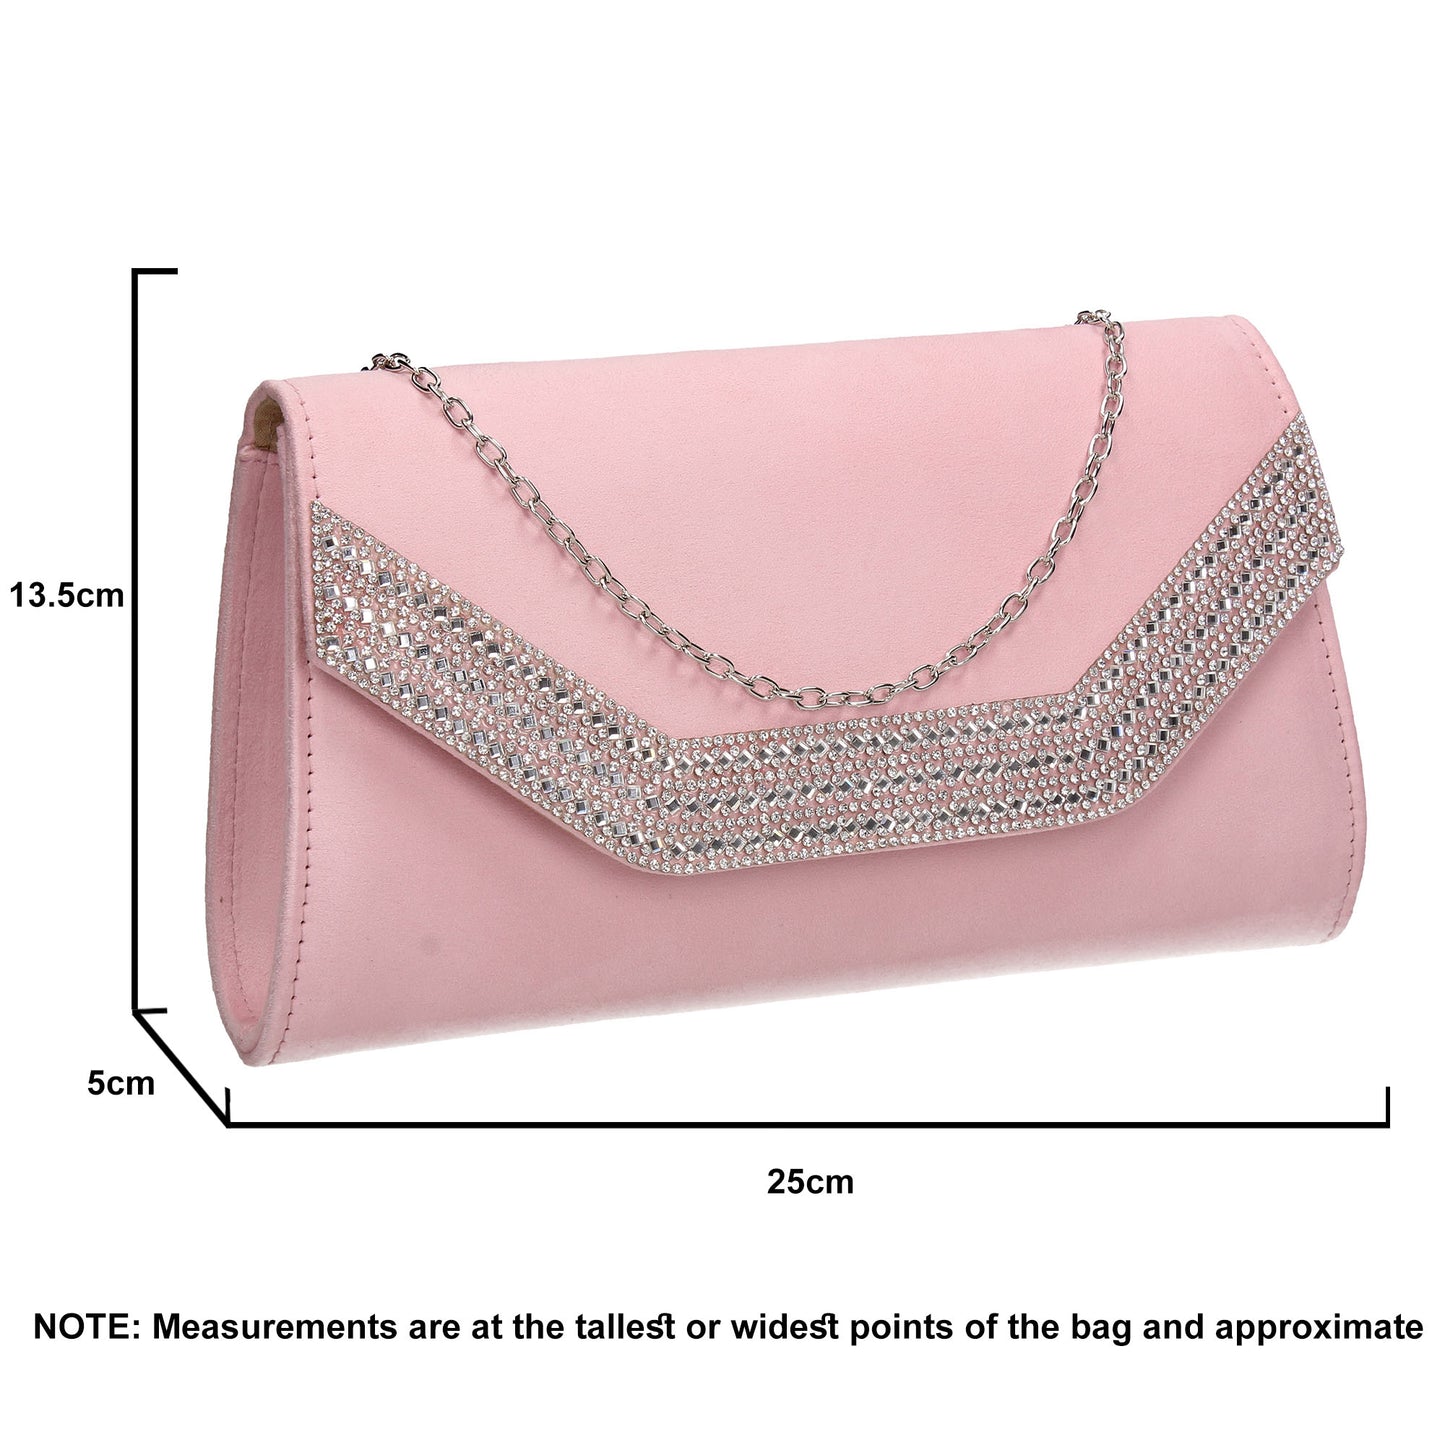 SWANKYSWANS Harper Clutch Bag Pink Cute Cheap Clutch Bag For Weddings School and Work